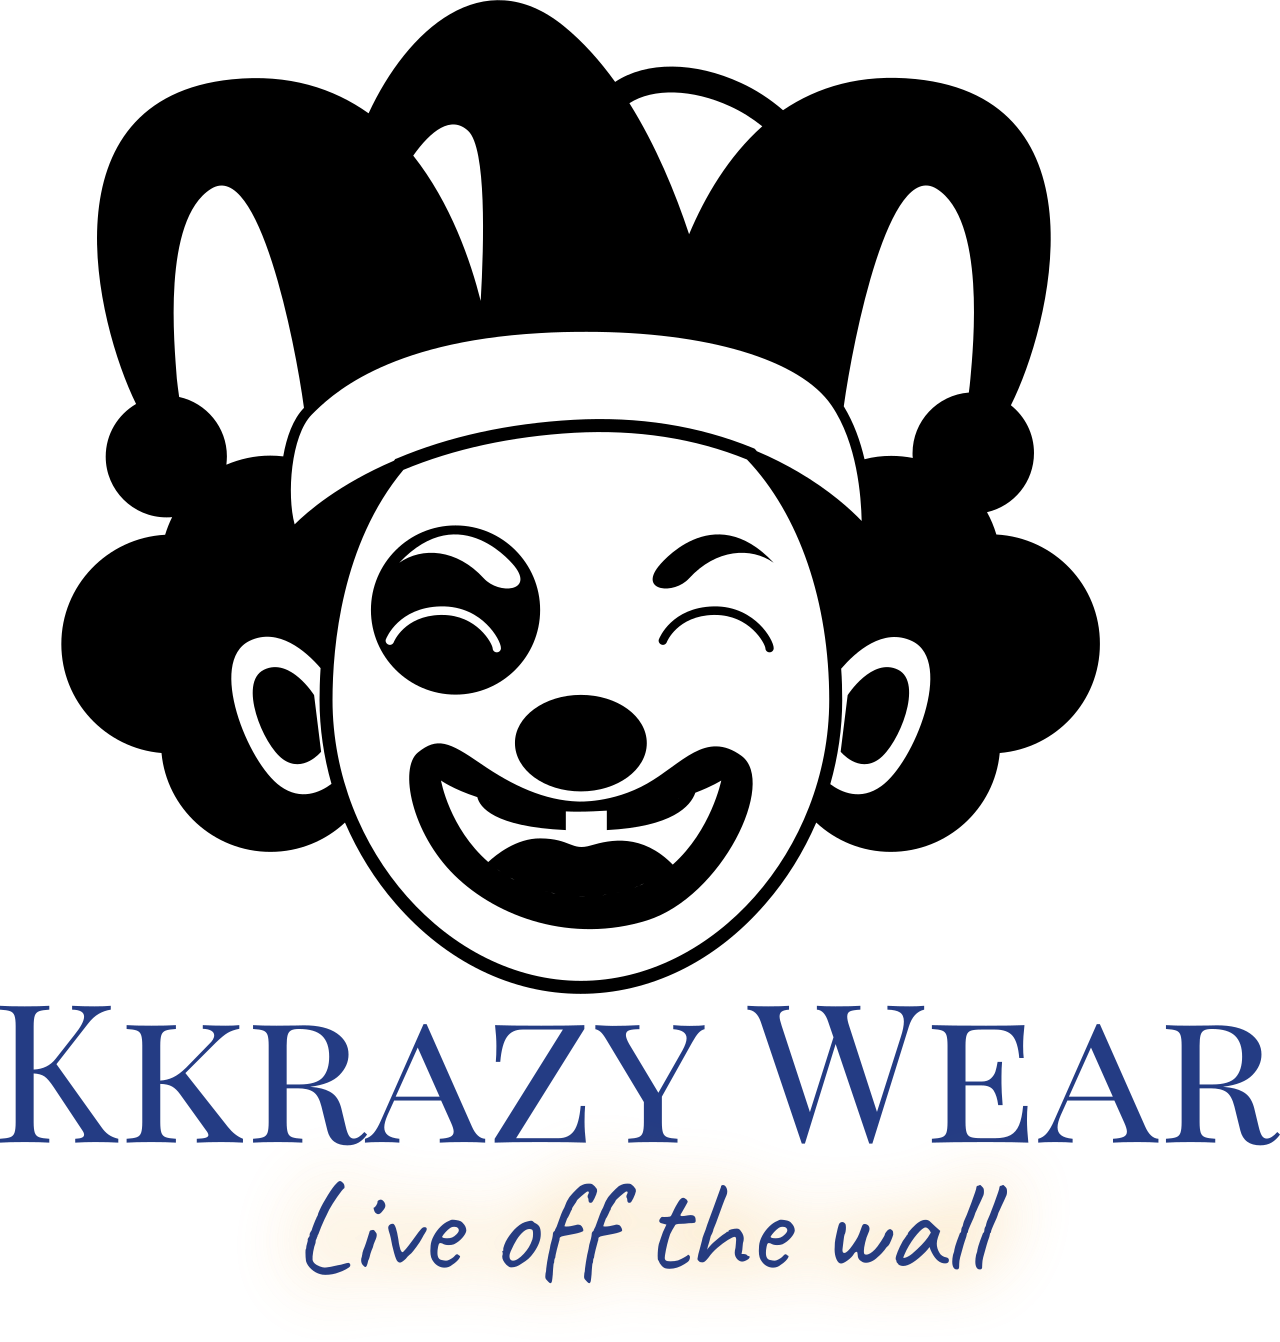 Kkrazy Wear's web page